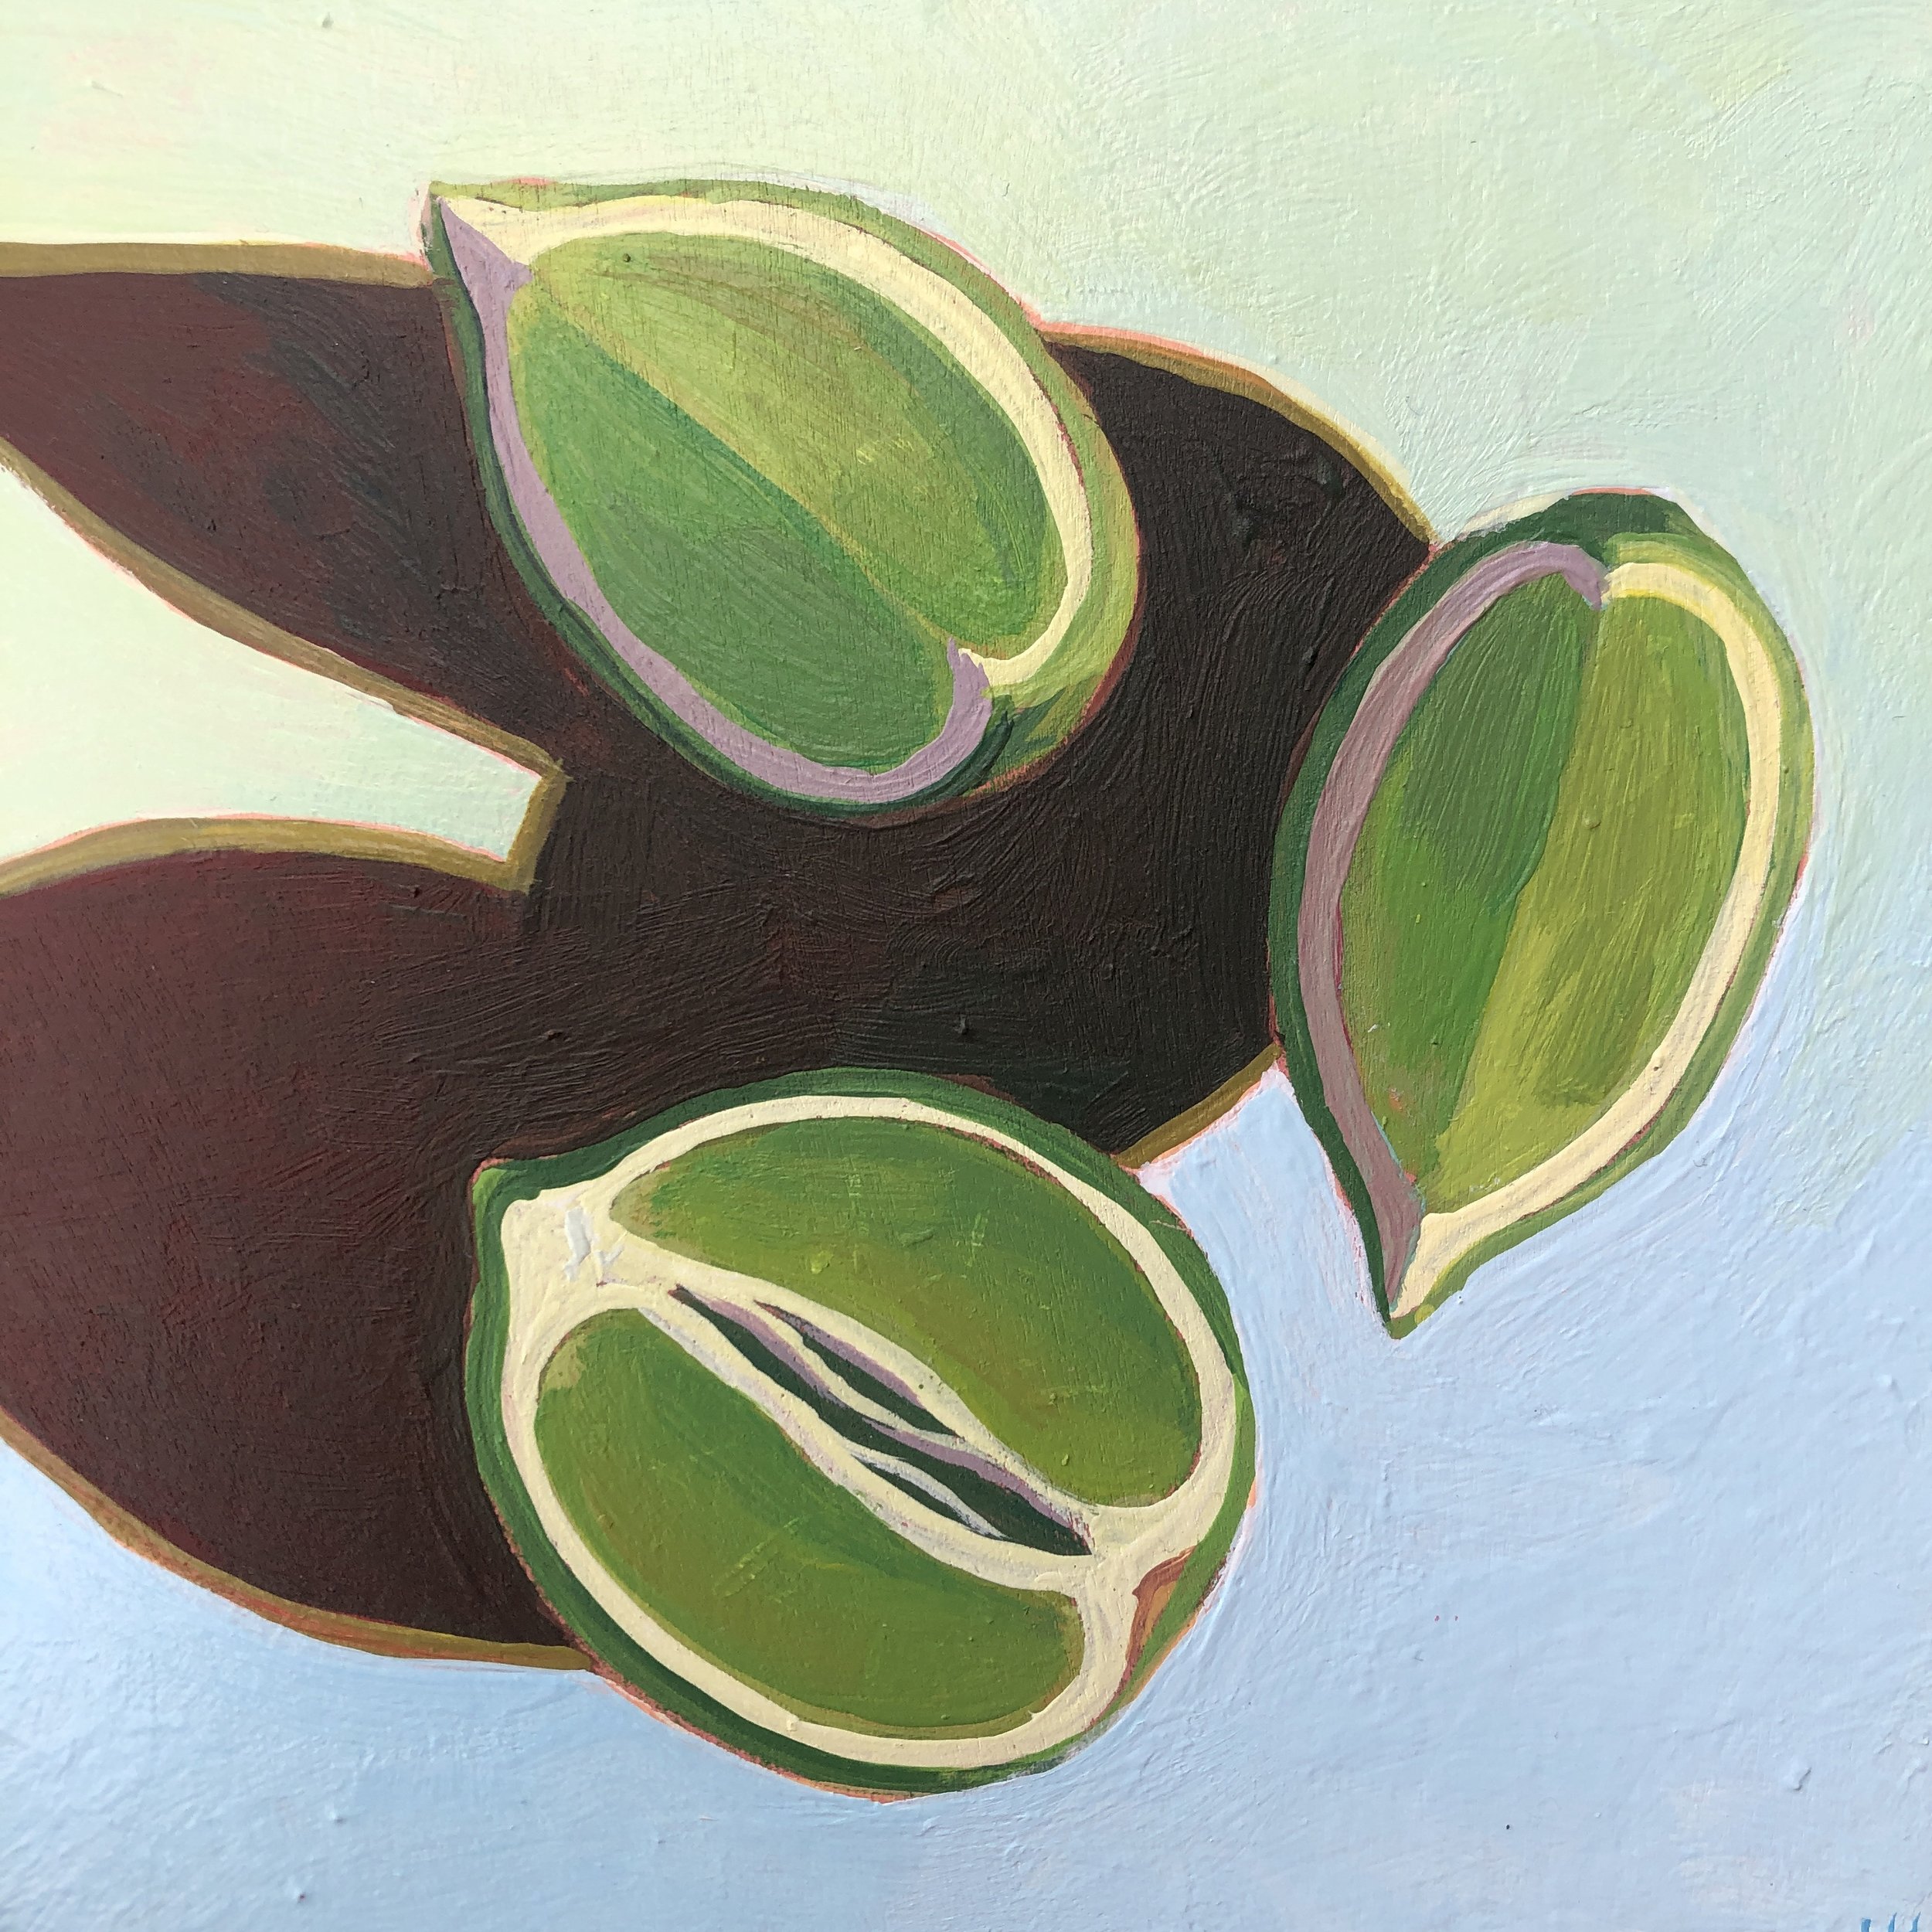 Limes by James Mertke